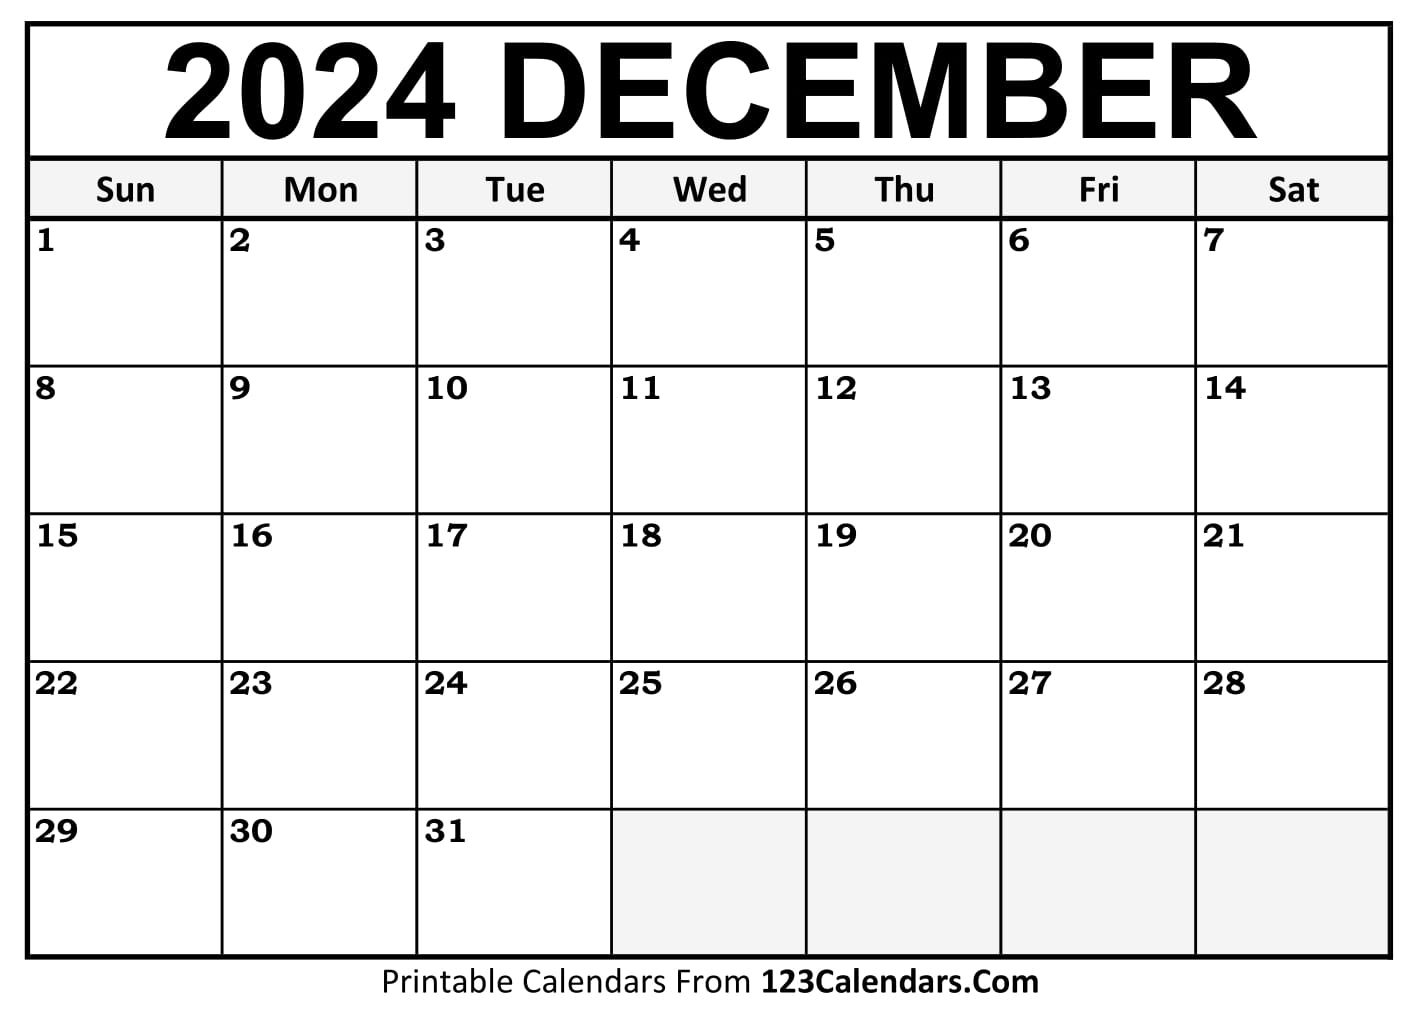 2024 December Calendar